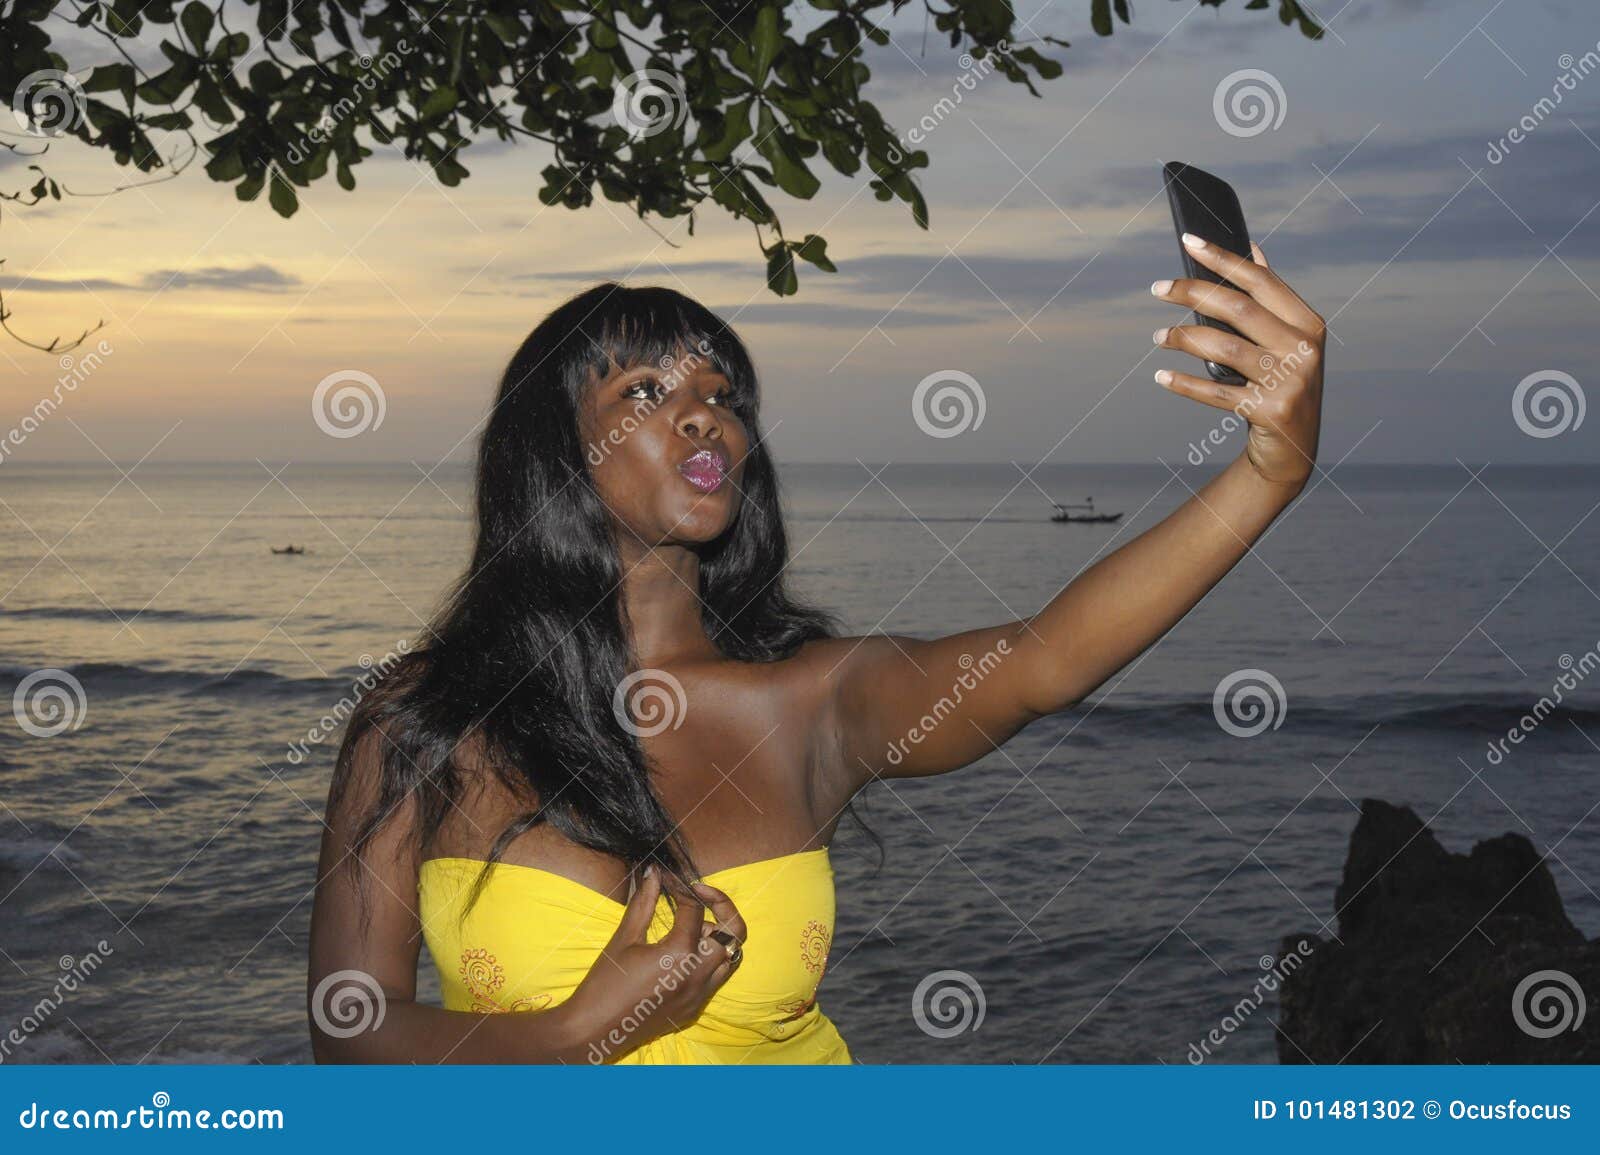 american ebony selfie free photo